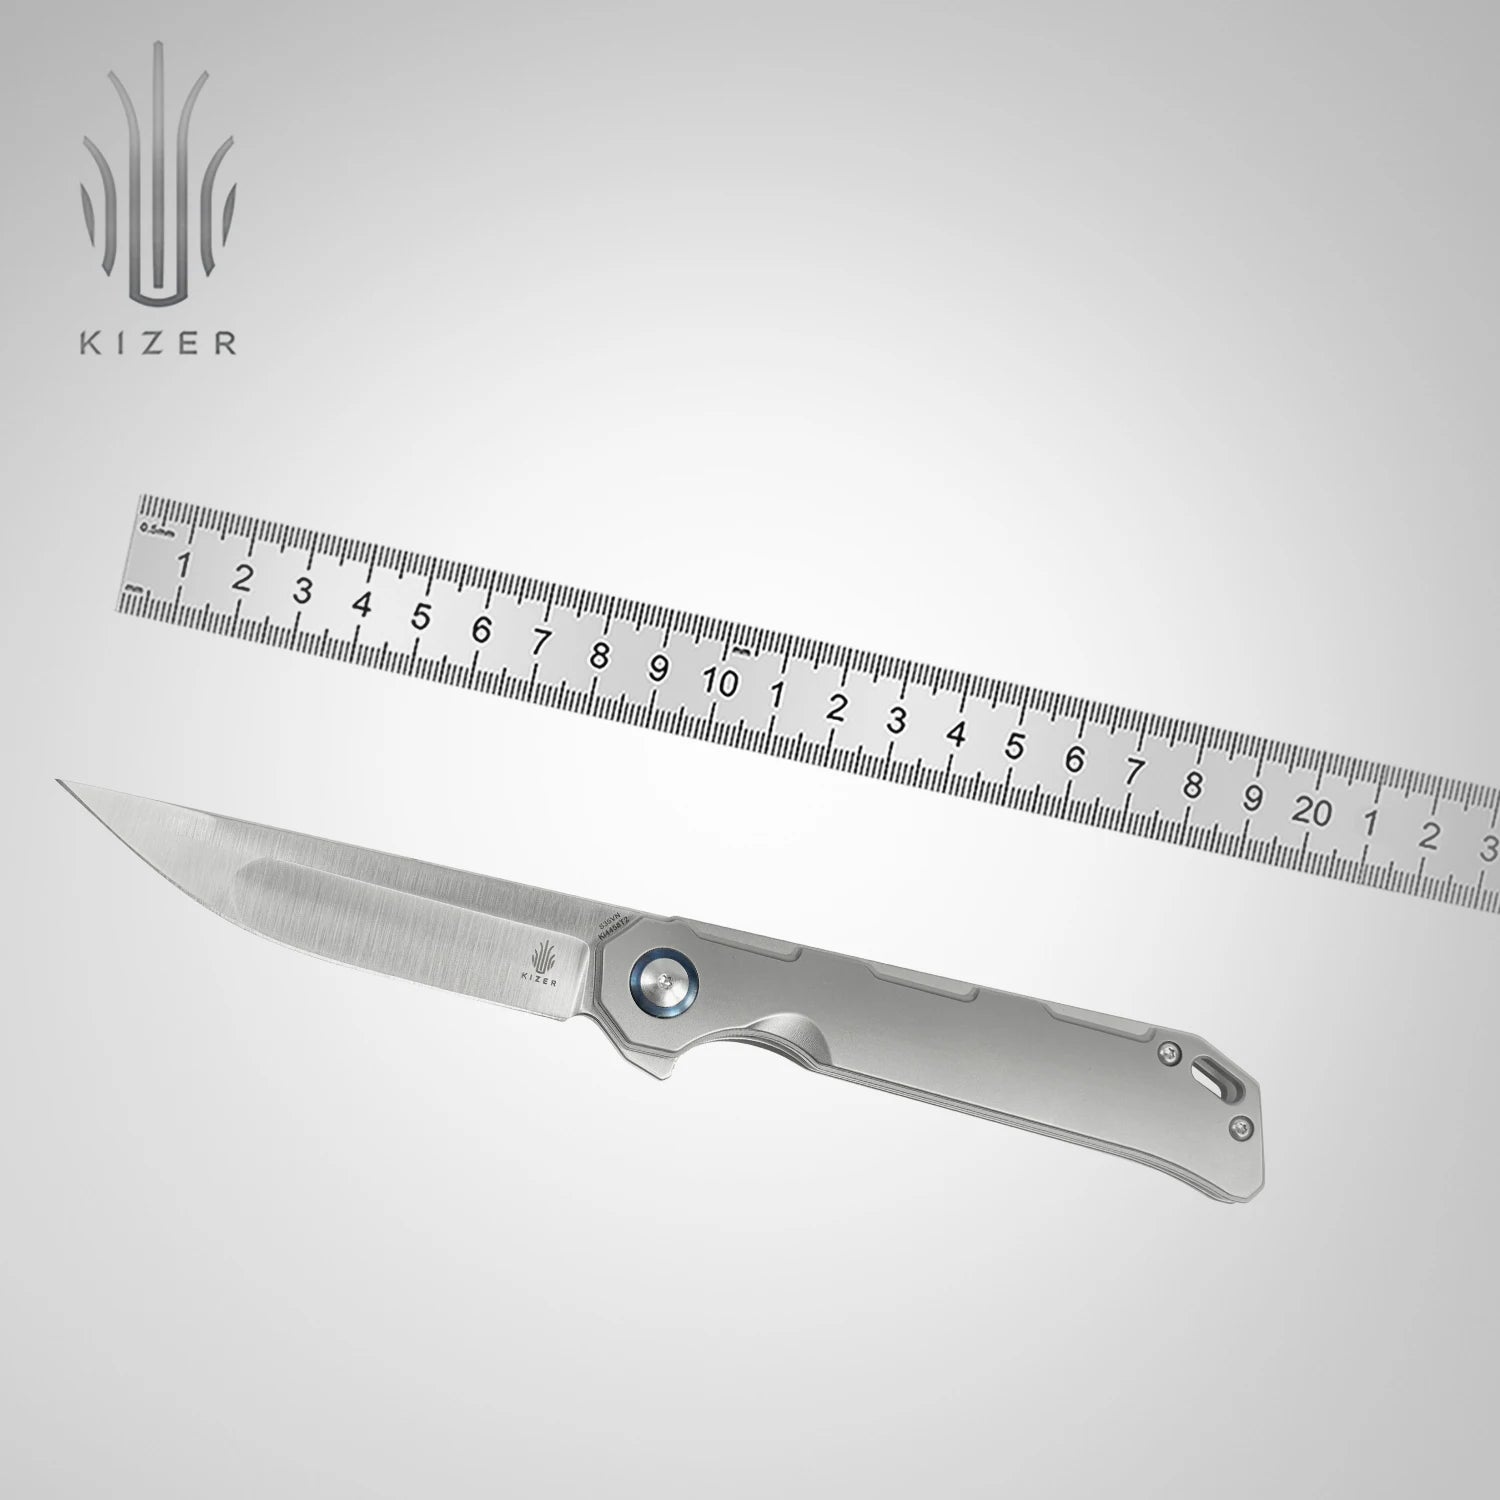 Kizer Tactical Knife, Ki4458T1/T2/T3/T4 Titanium/Carbon Fiber Handle with S35VN Steel Blade Folding Pocket Knife